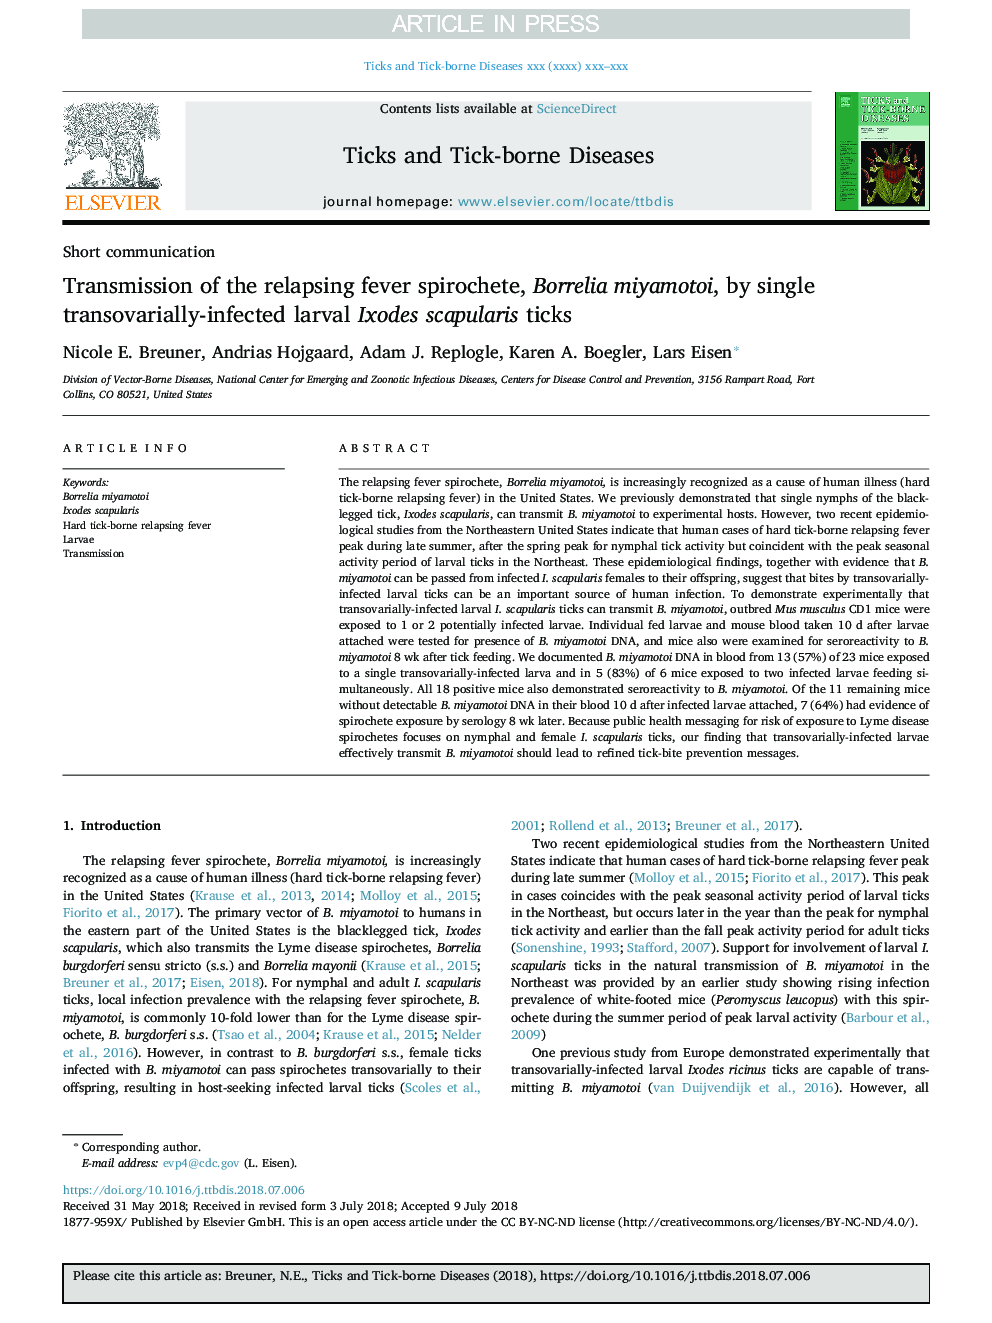 Transmission of the relapsing fever spirochete, Borrelia miyamotoi, by single transovarially-infected larval Ixodes scapularis ticks